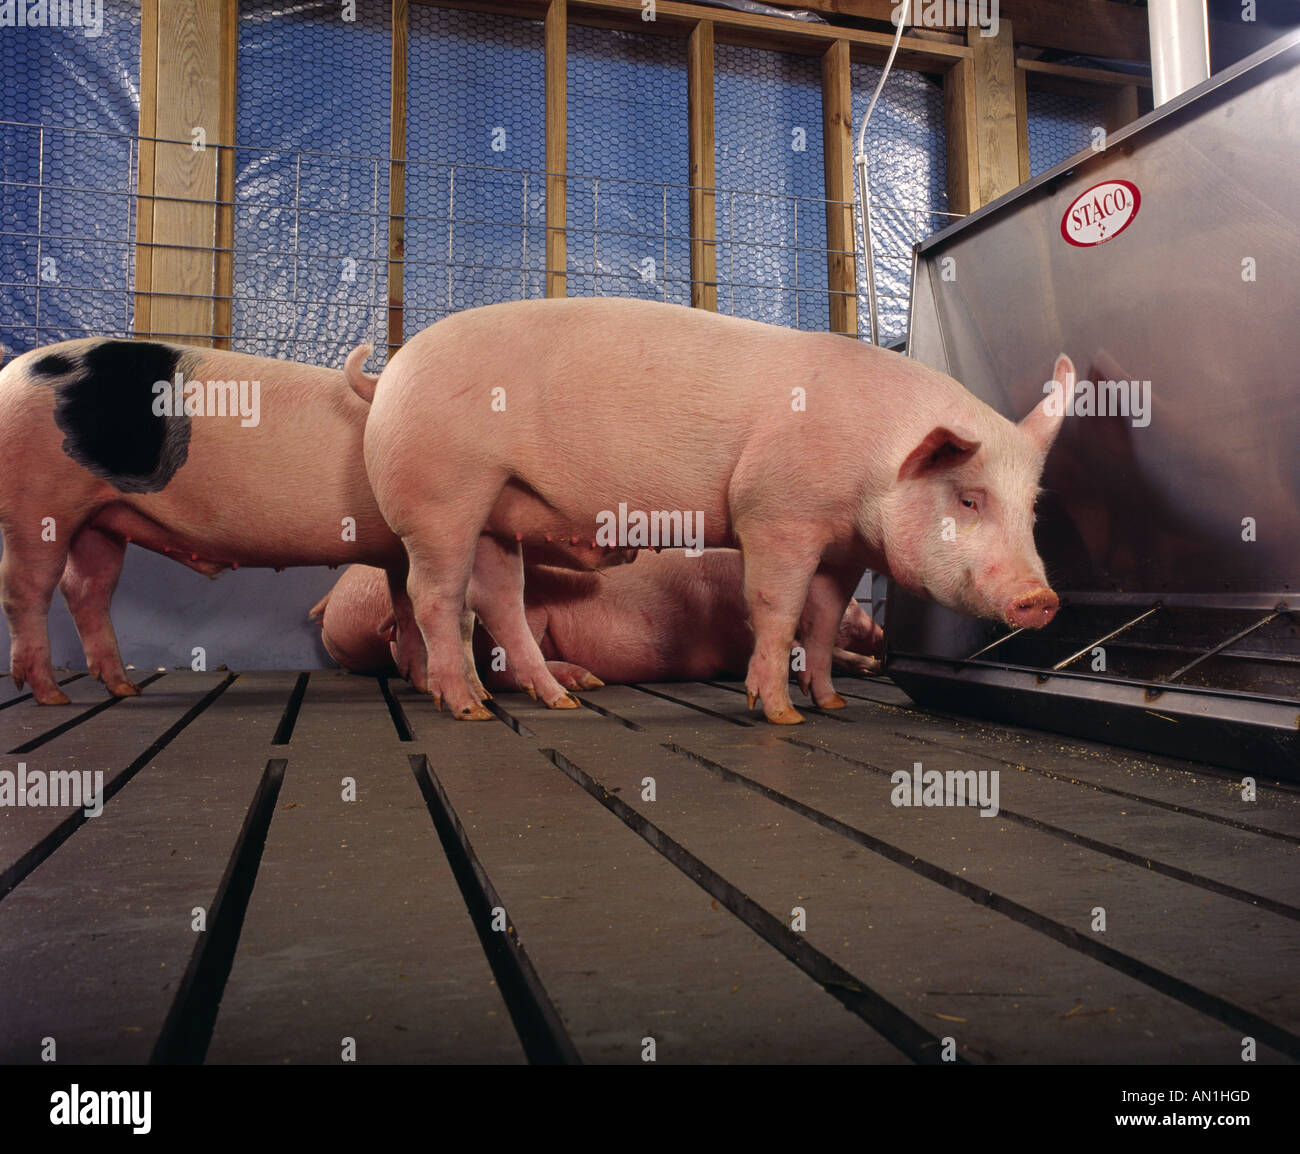 MARKET WEIGHT PIGS IN PEN FEEDING PENNSYLVANIA Stock Photo